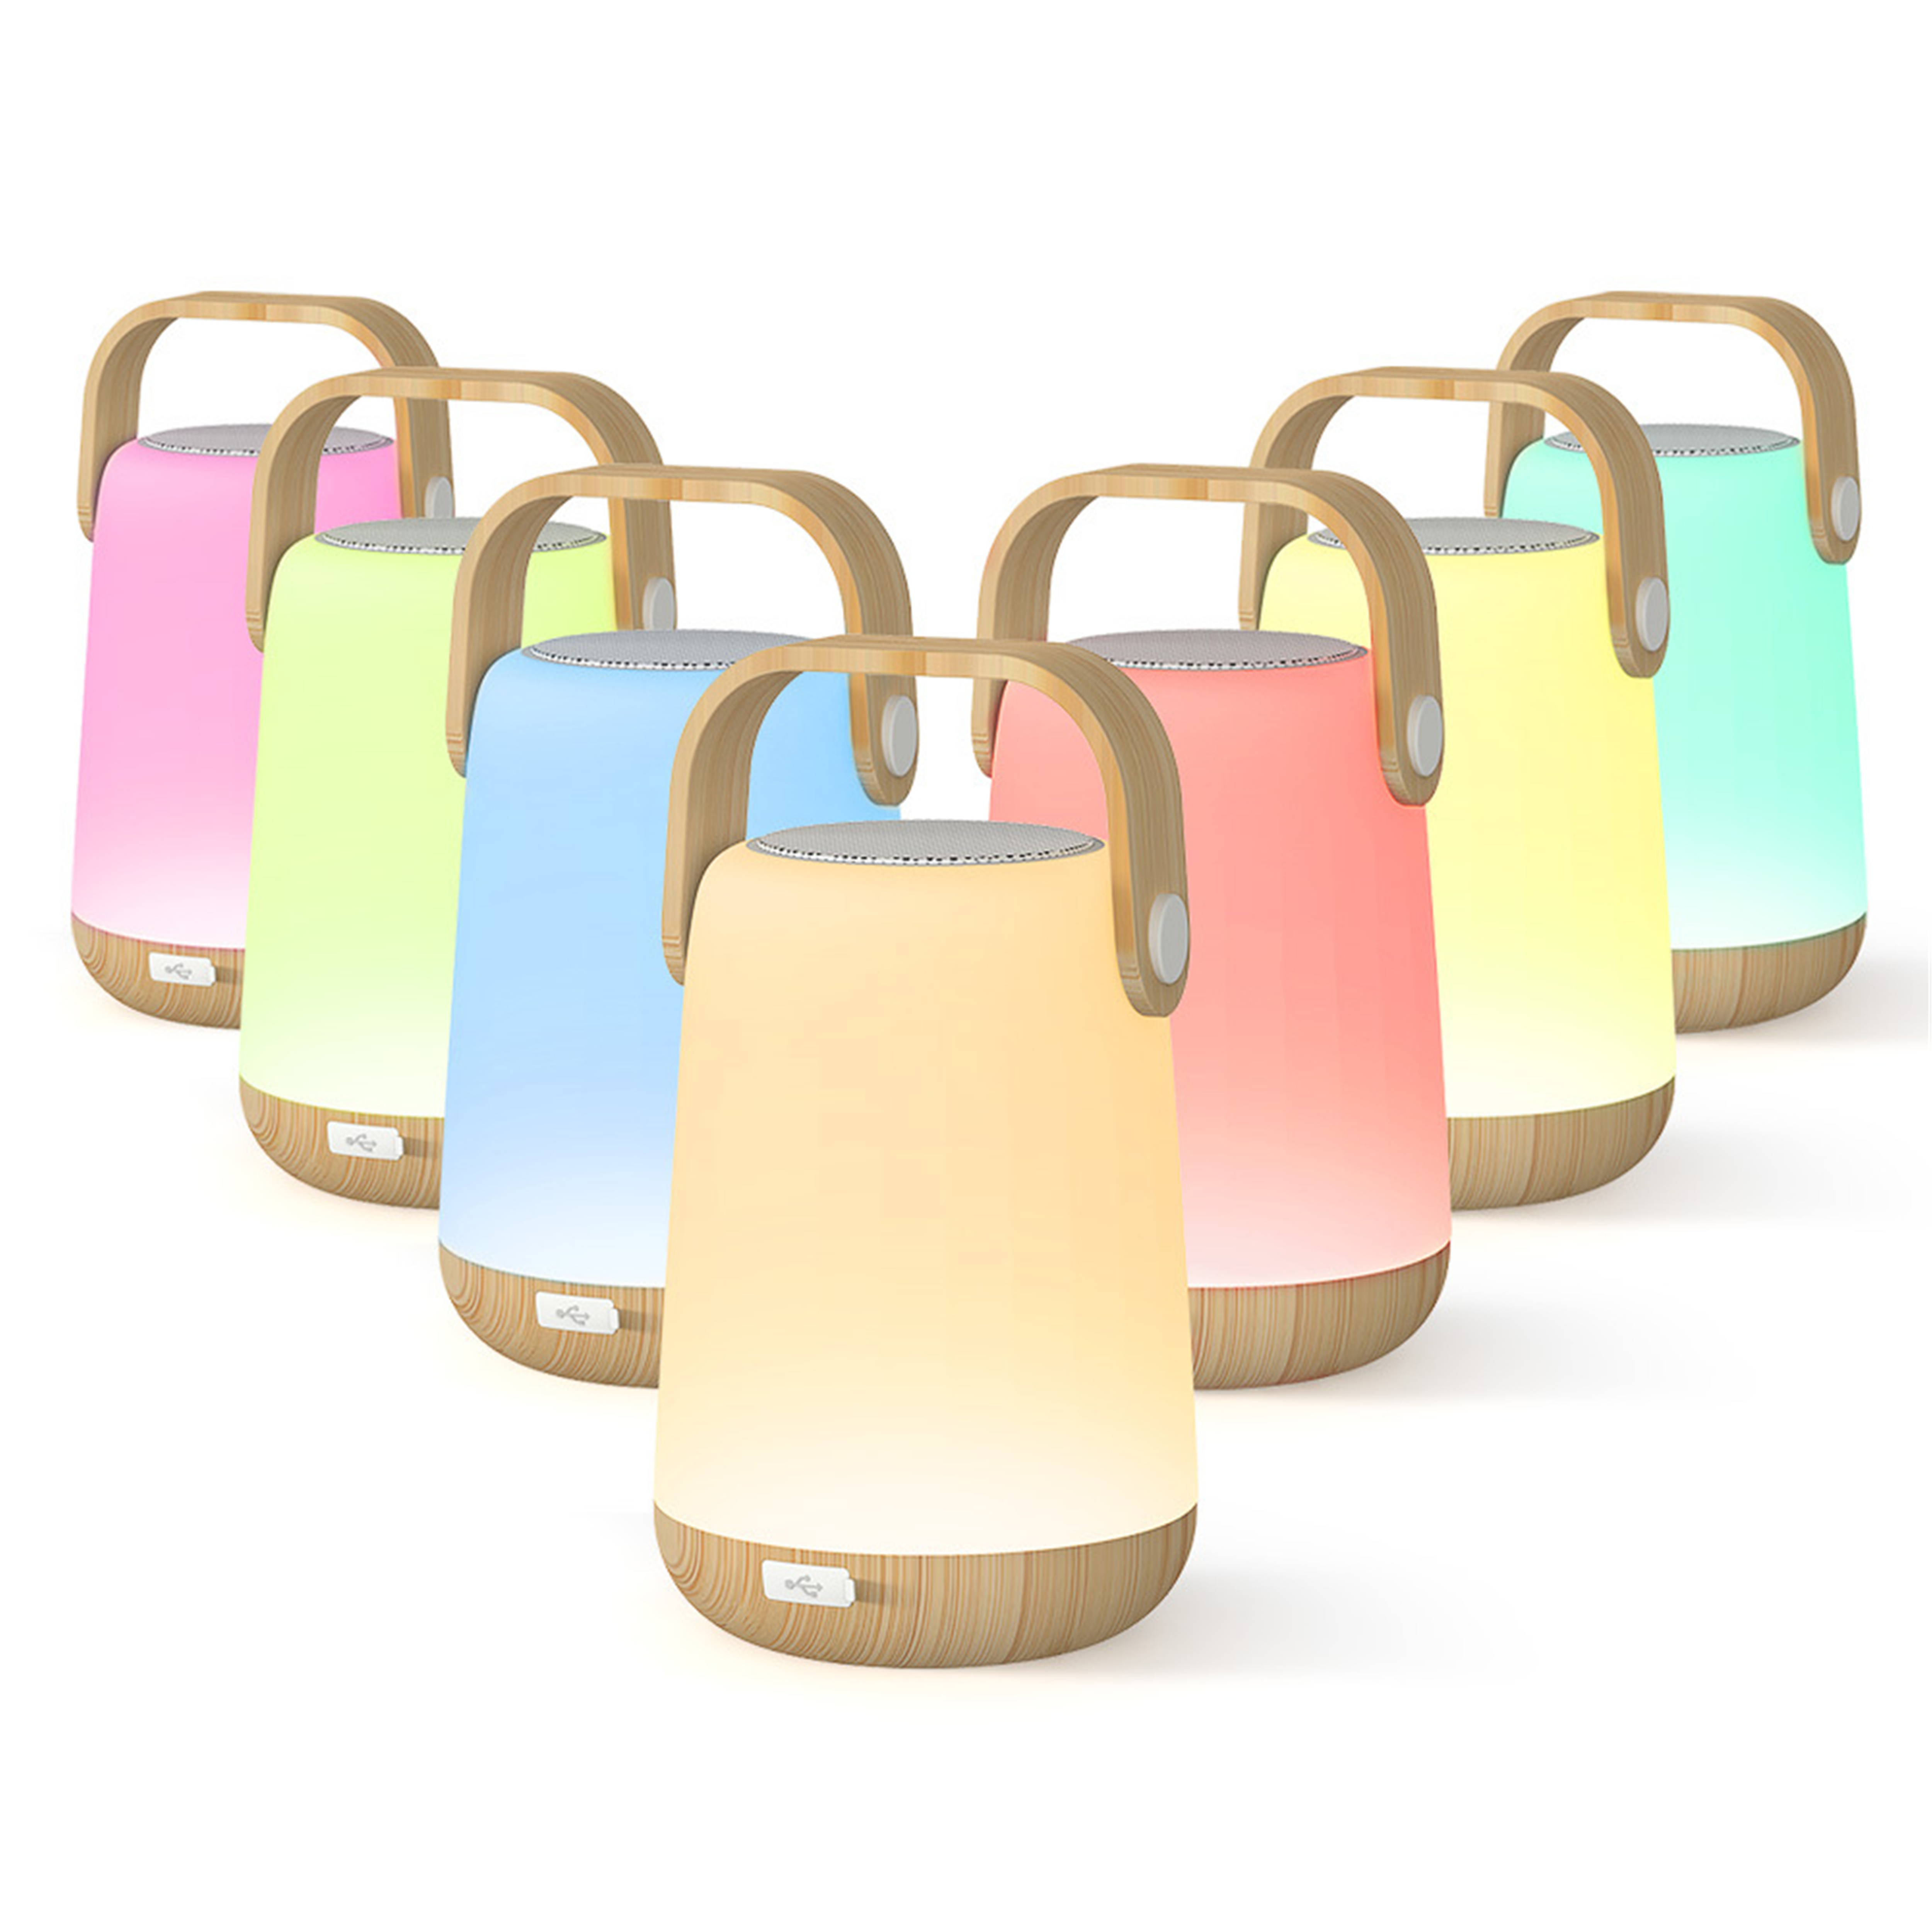 Colorful LED bedside night light Bamboo wood wireless Bluetooth audio portable handle Bluetooth speaker